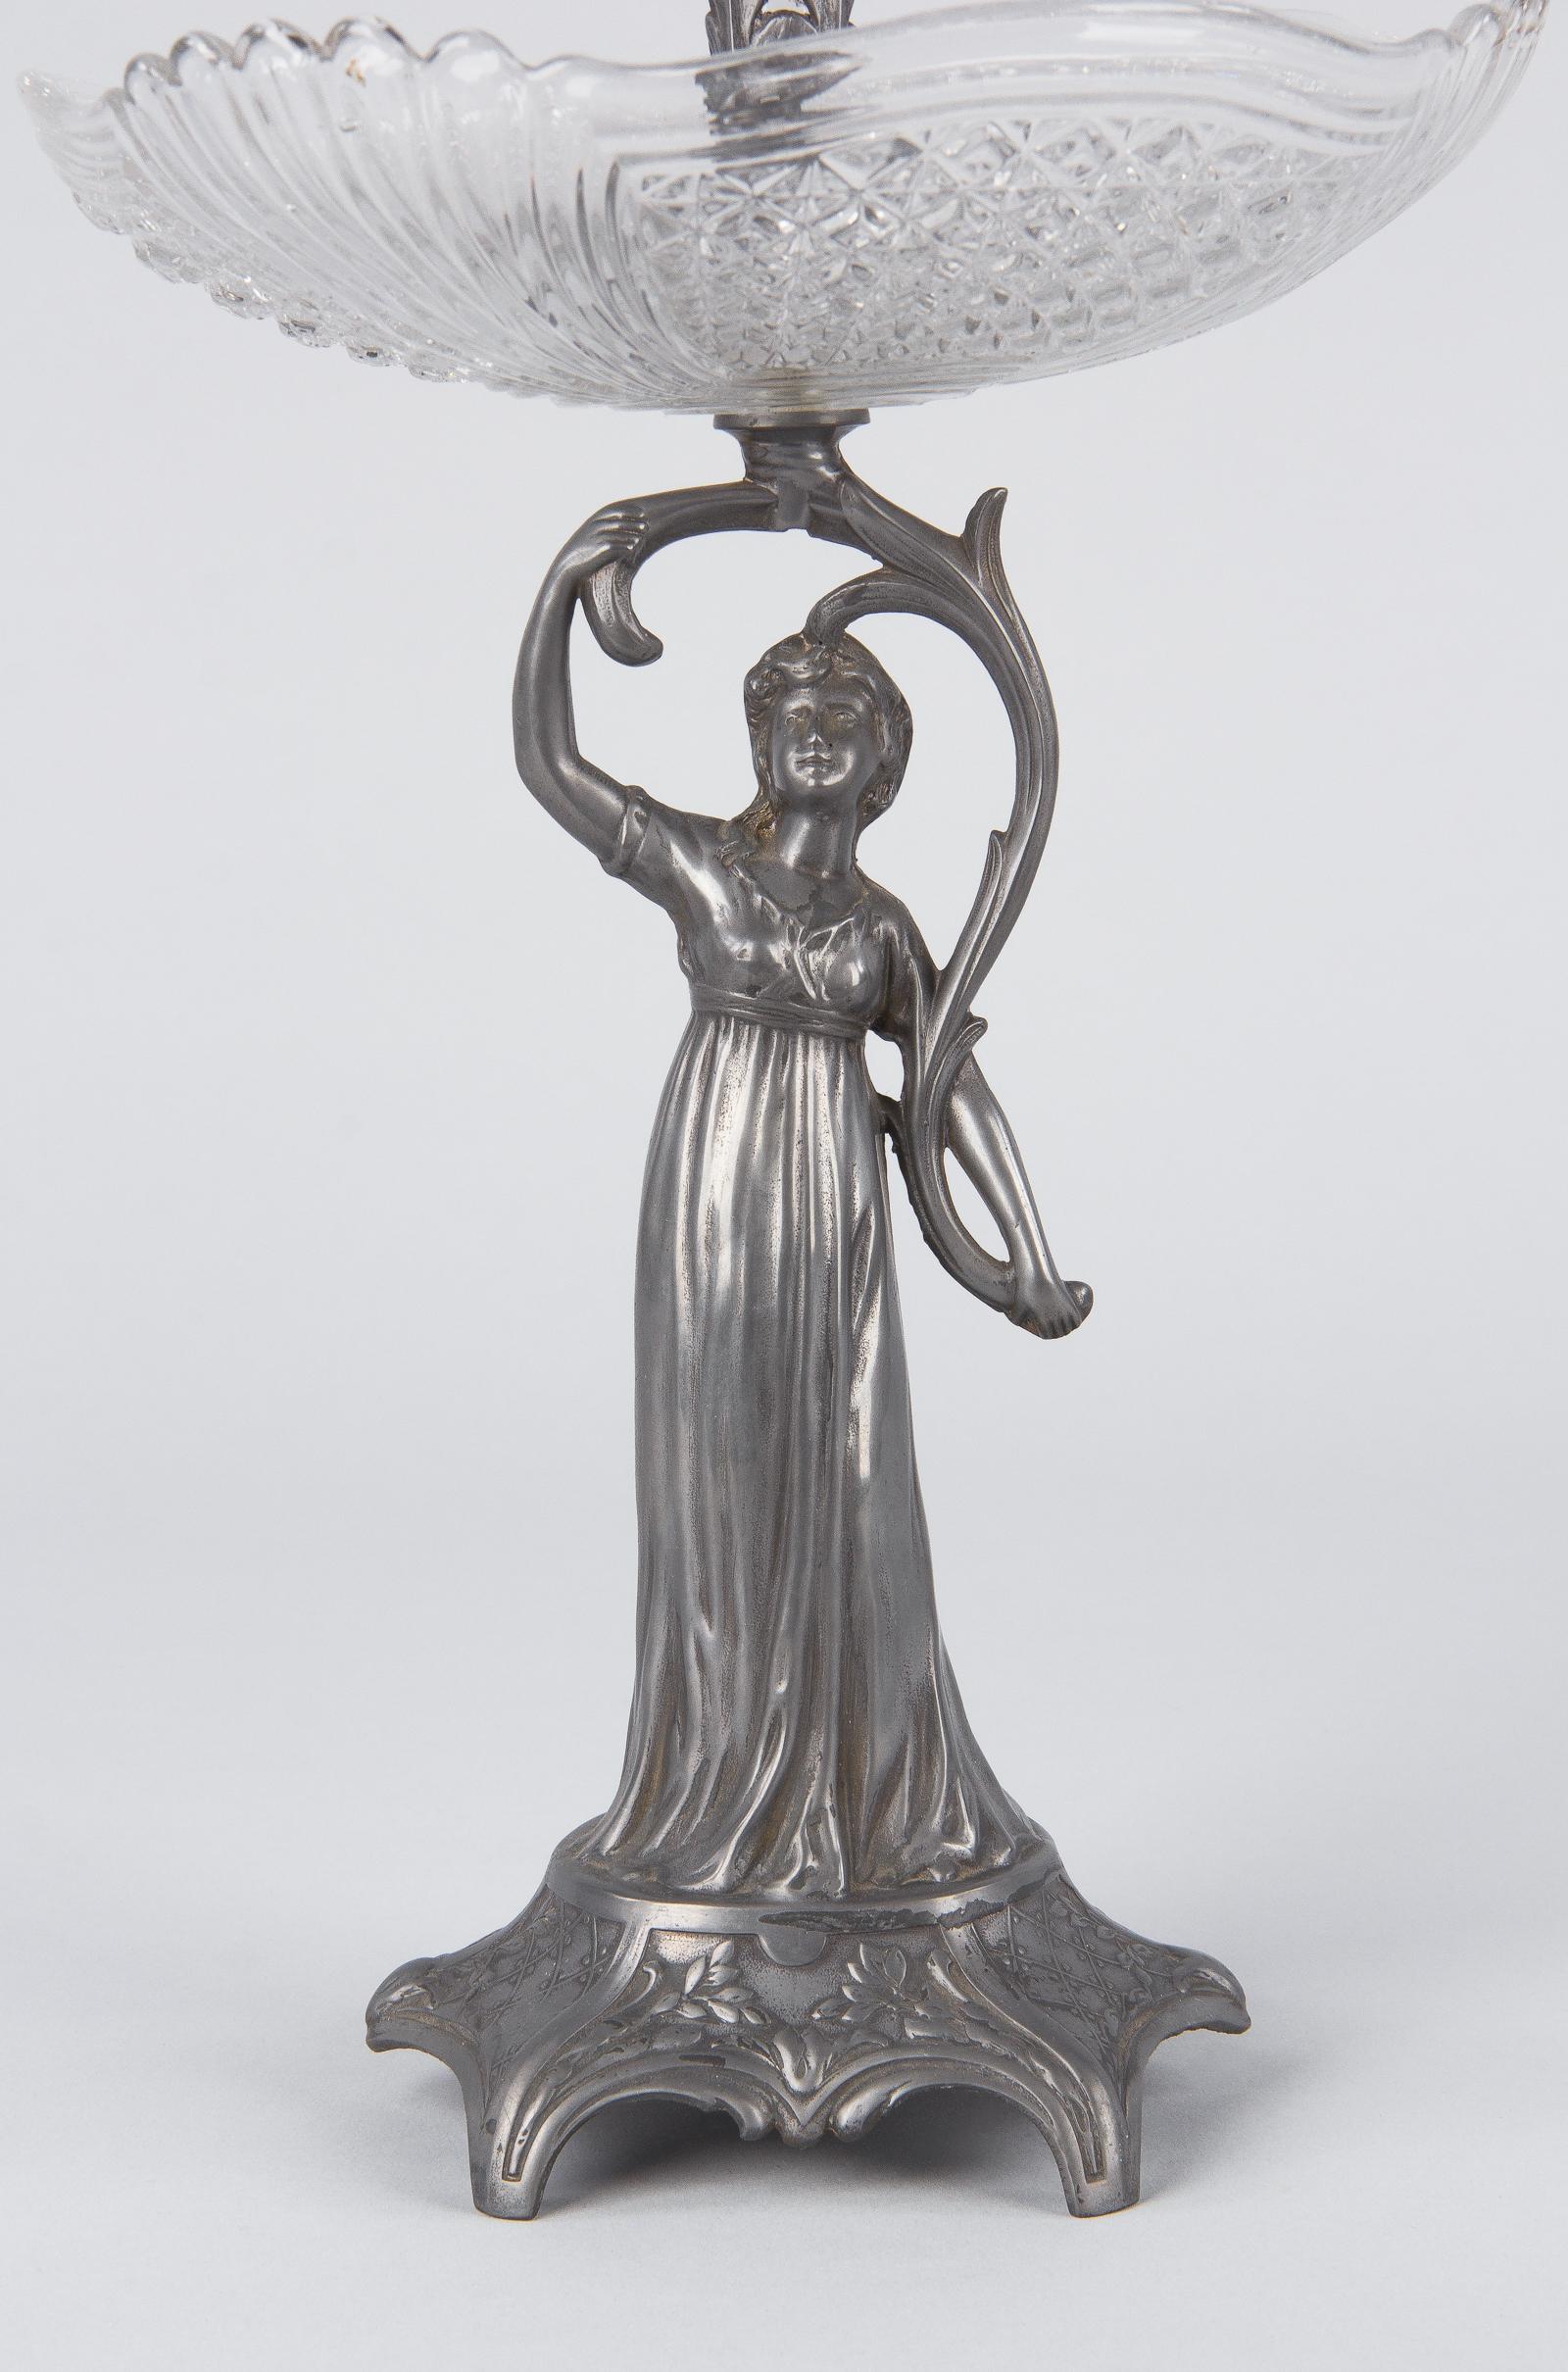 Cut Glass Art Nouveau Val Saint Lambert Pewter Figurine with Crystal Vase, Belgium, 1910s